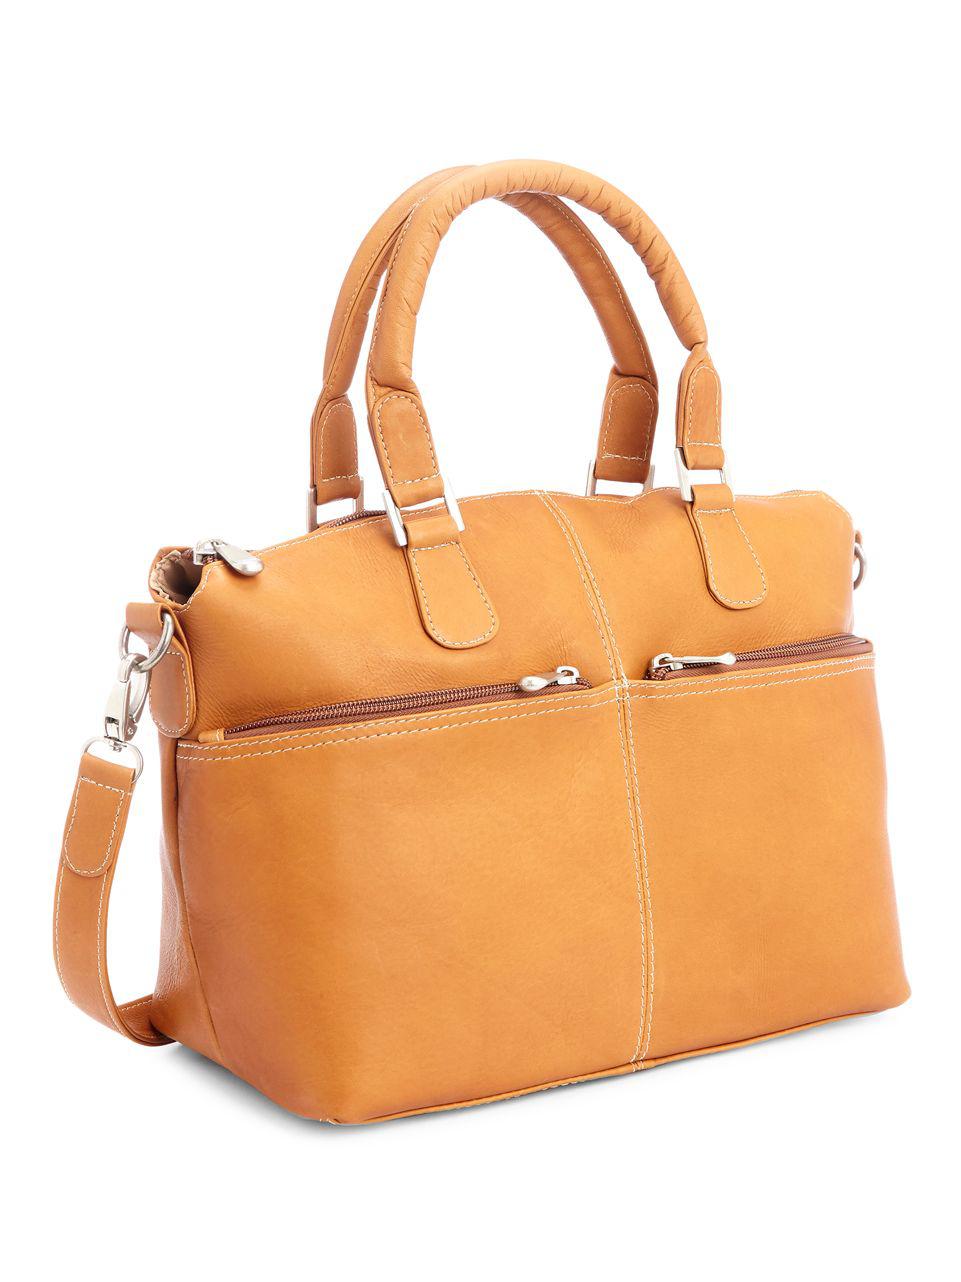 Royce New York Leather Travel Weekender Duffel Bag in Natural - Lyst